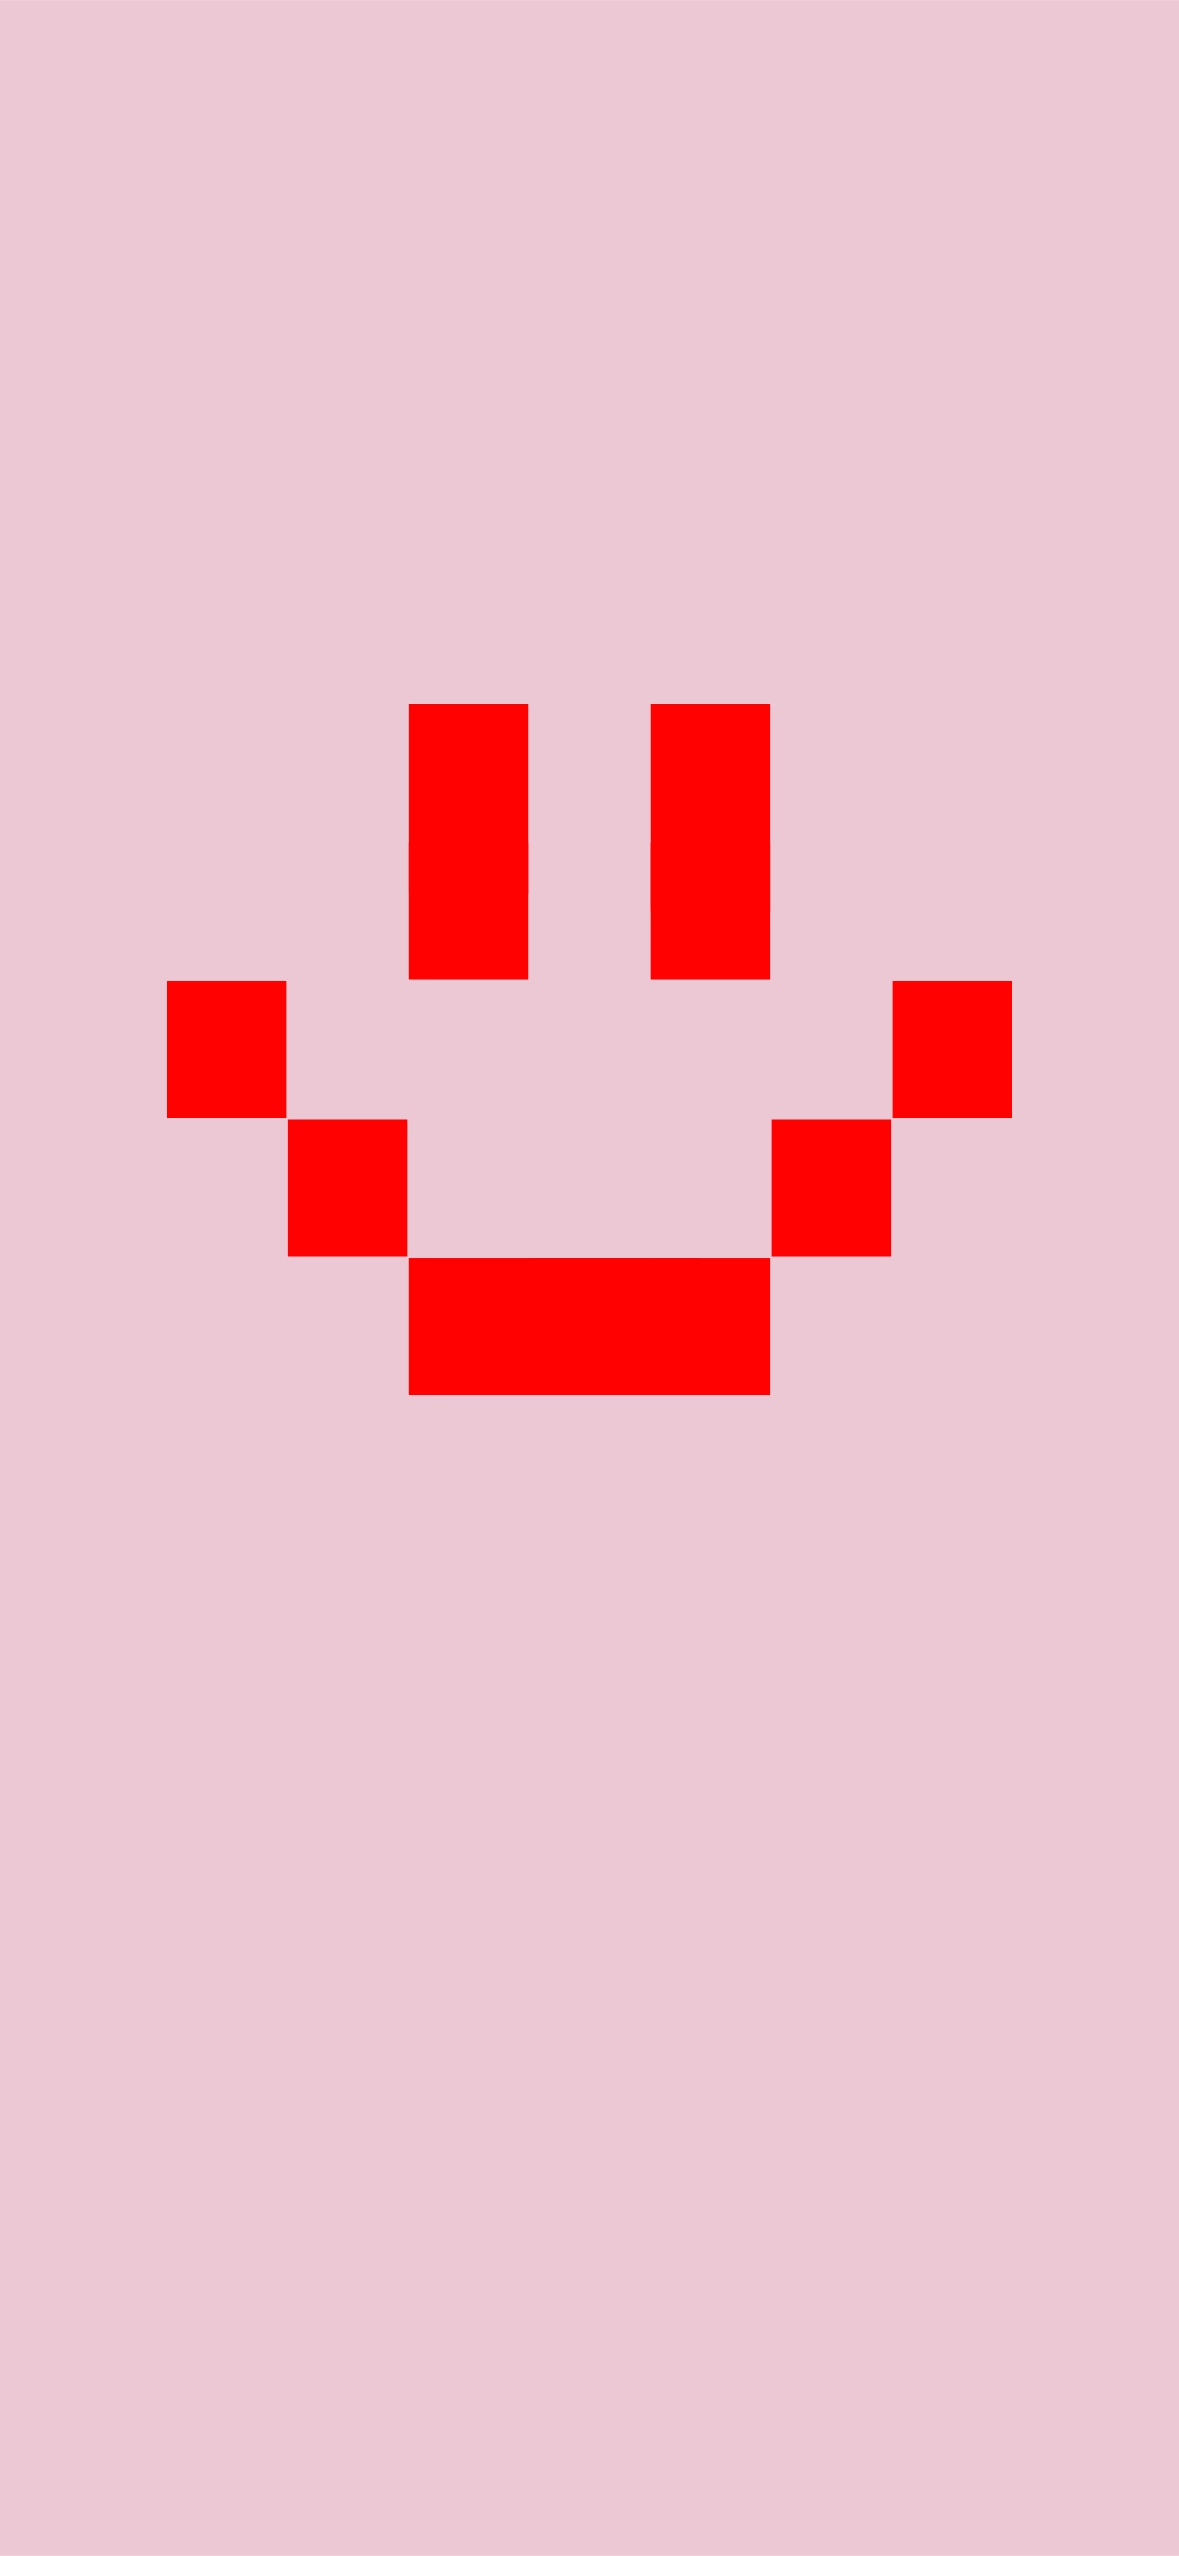 smyley en pixel rouge sur fond rose